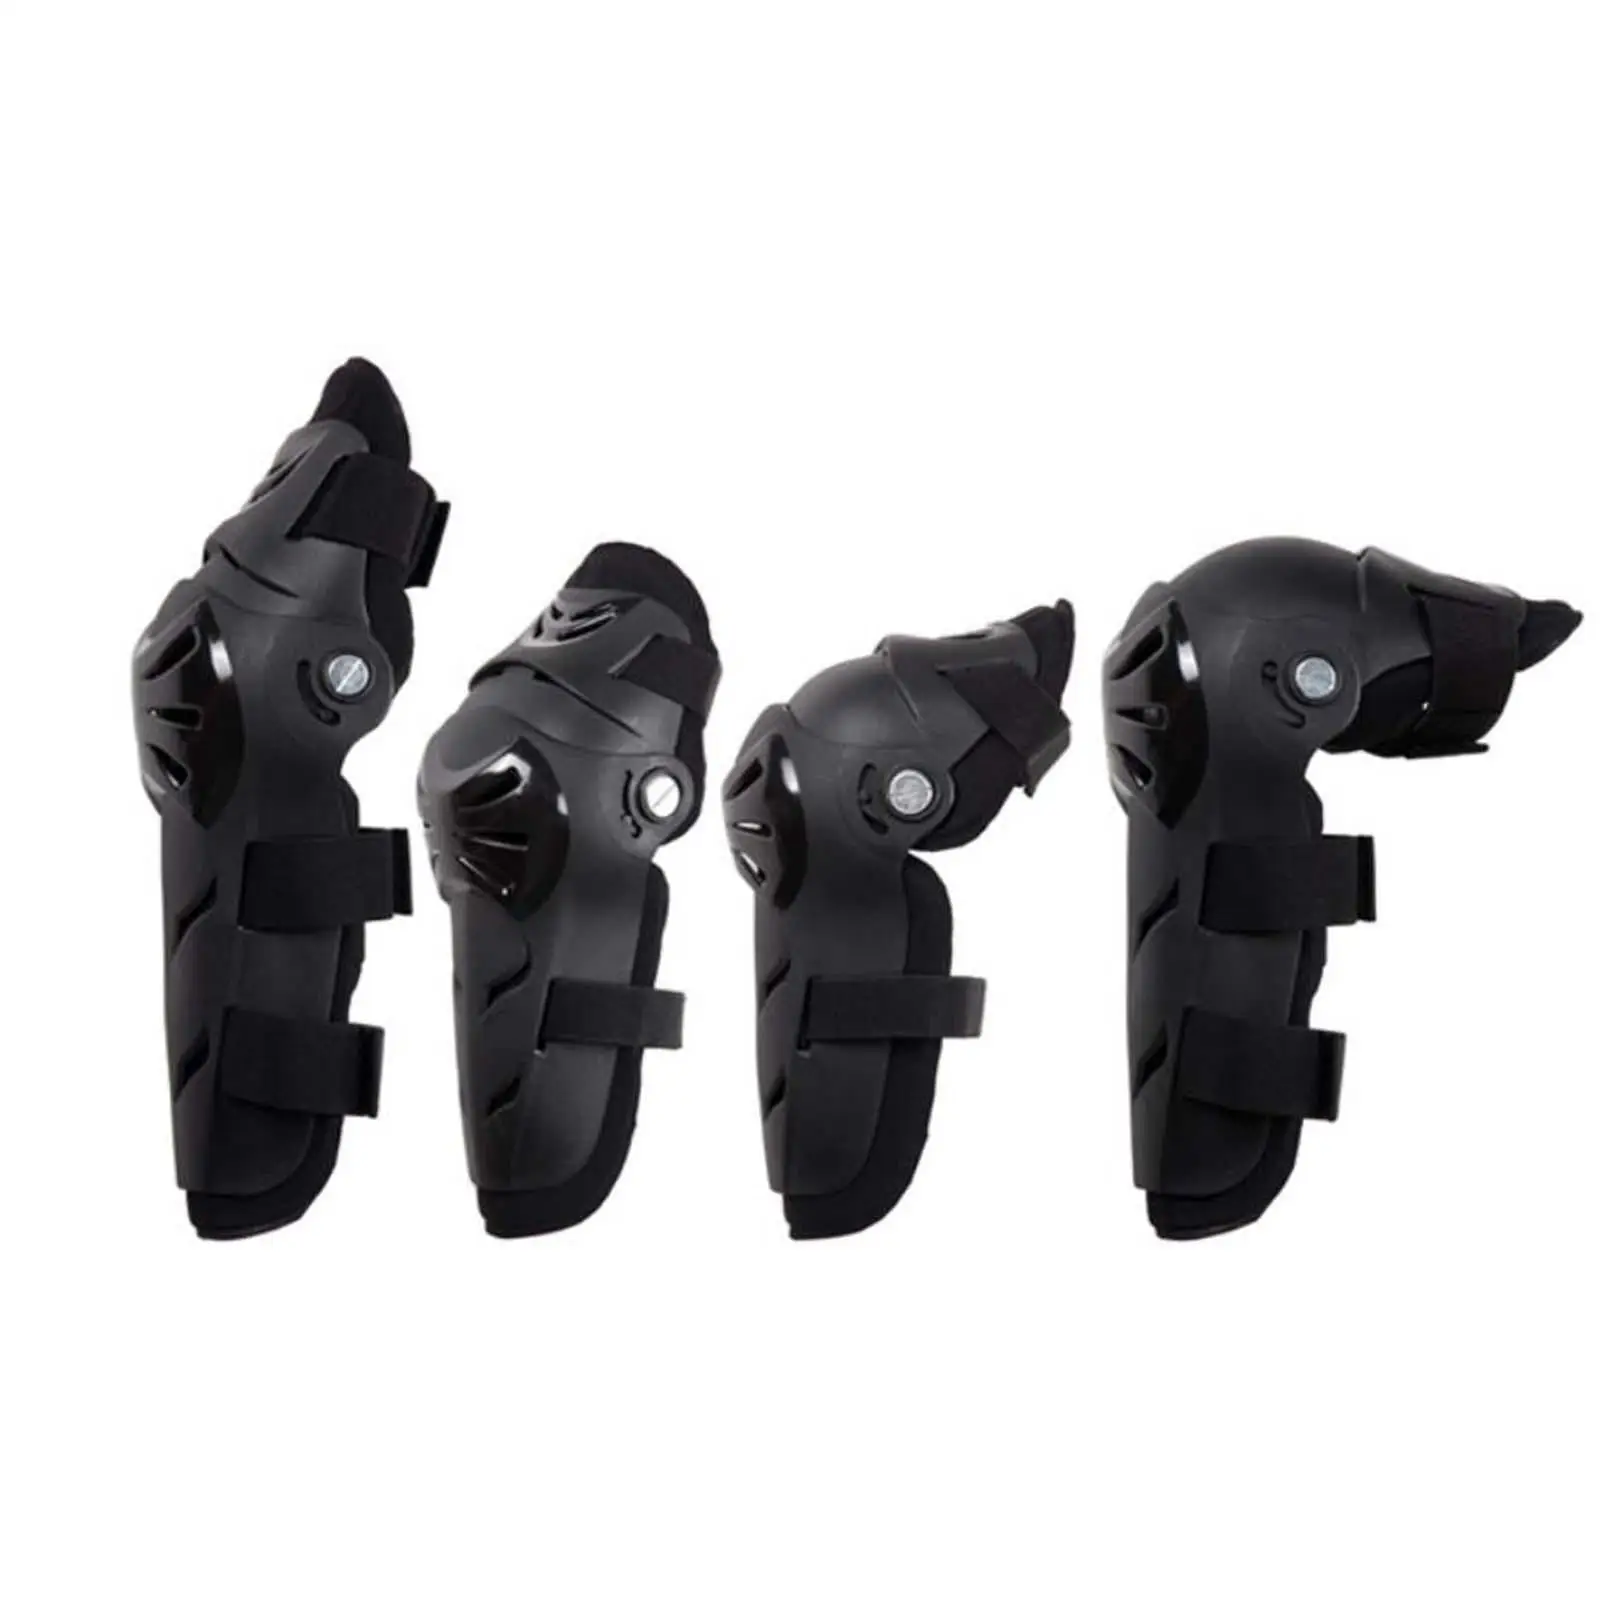 4x Motorcycle Knee Shin Guards Adjustable for Skating Skiing Motocross